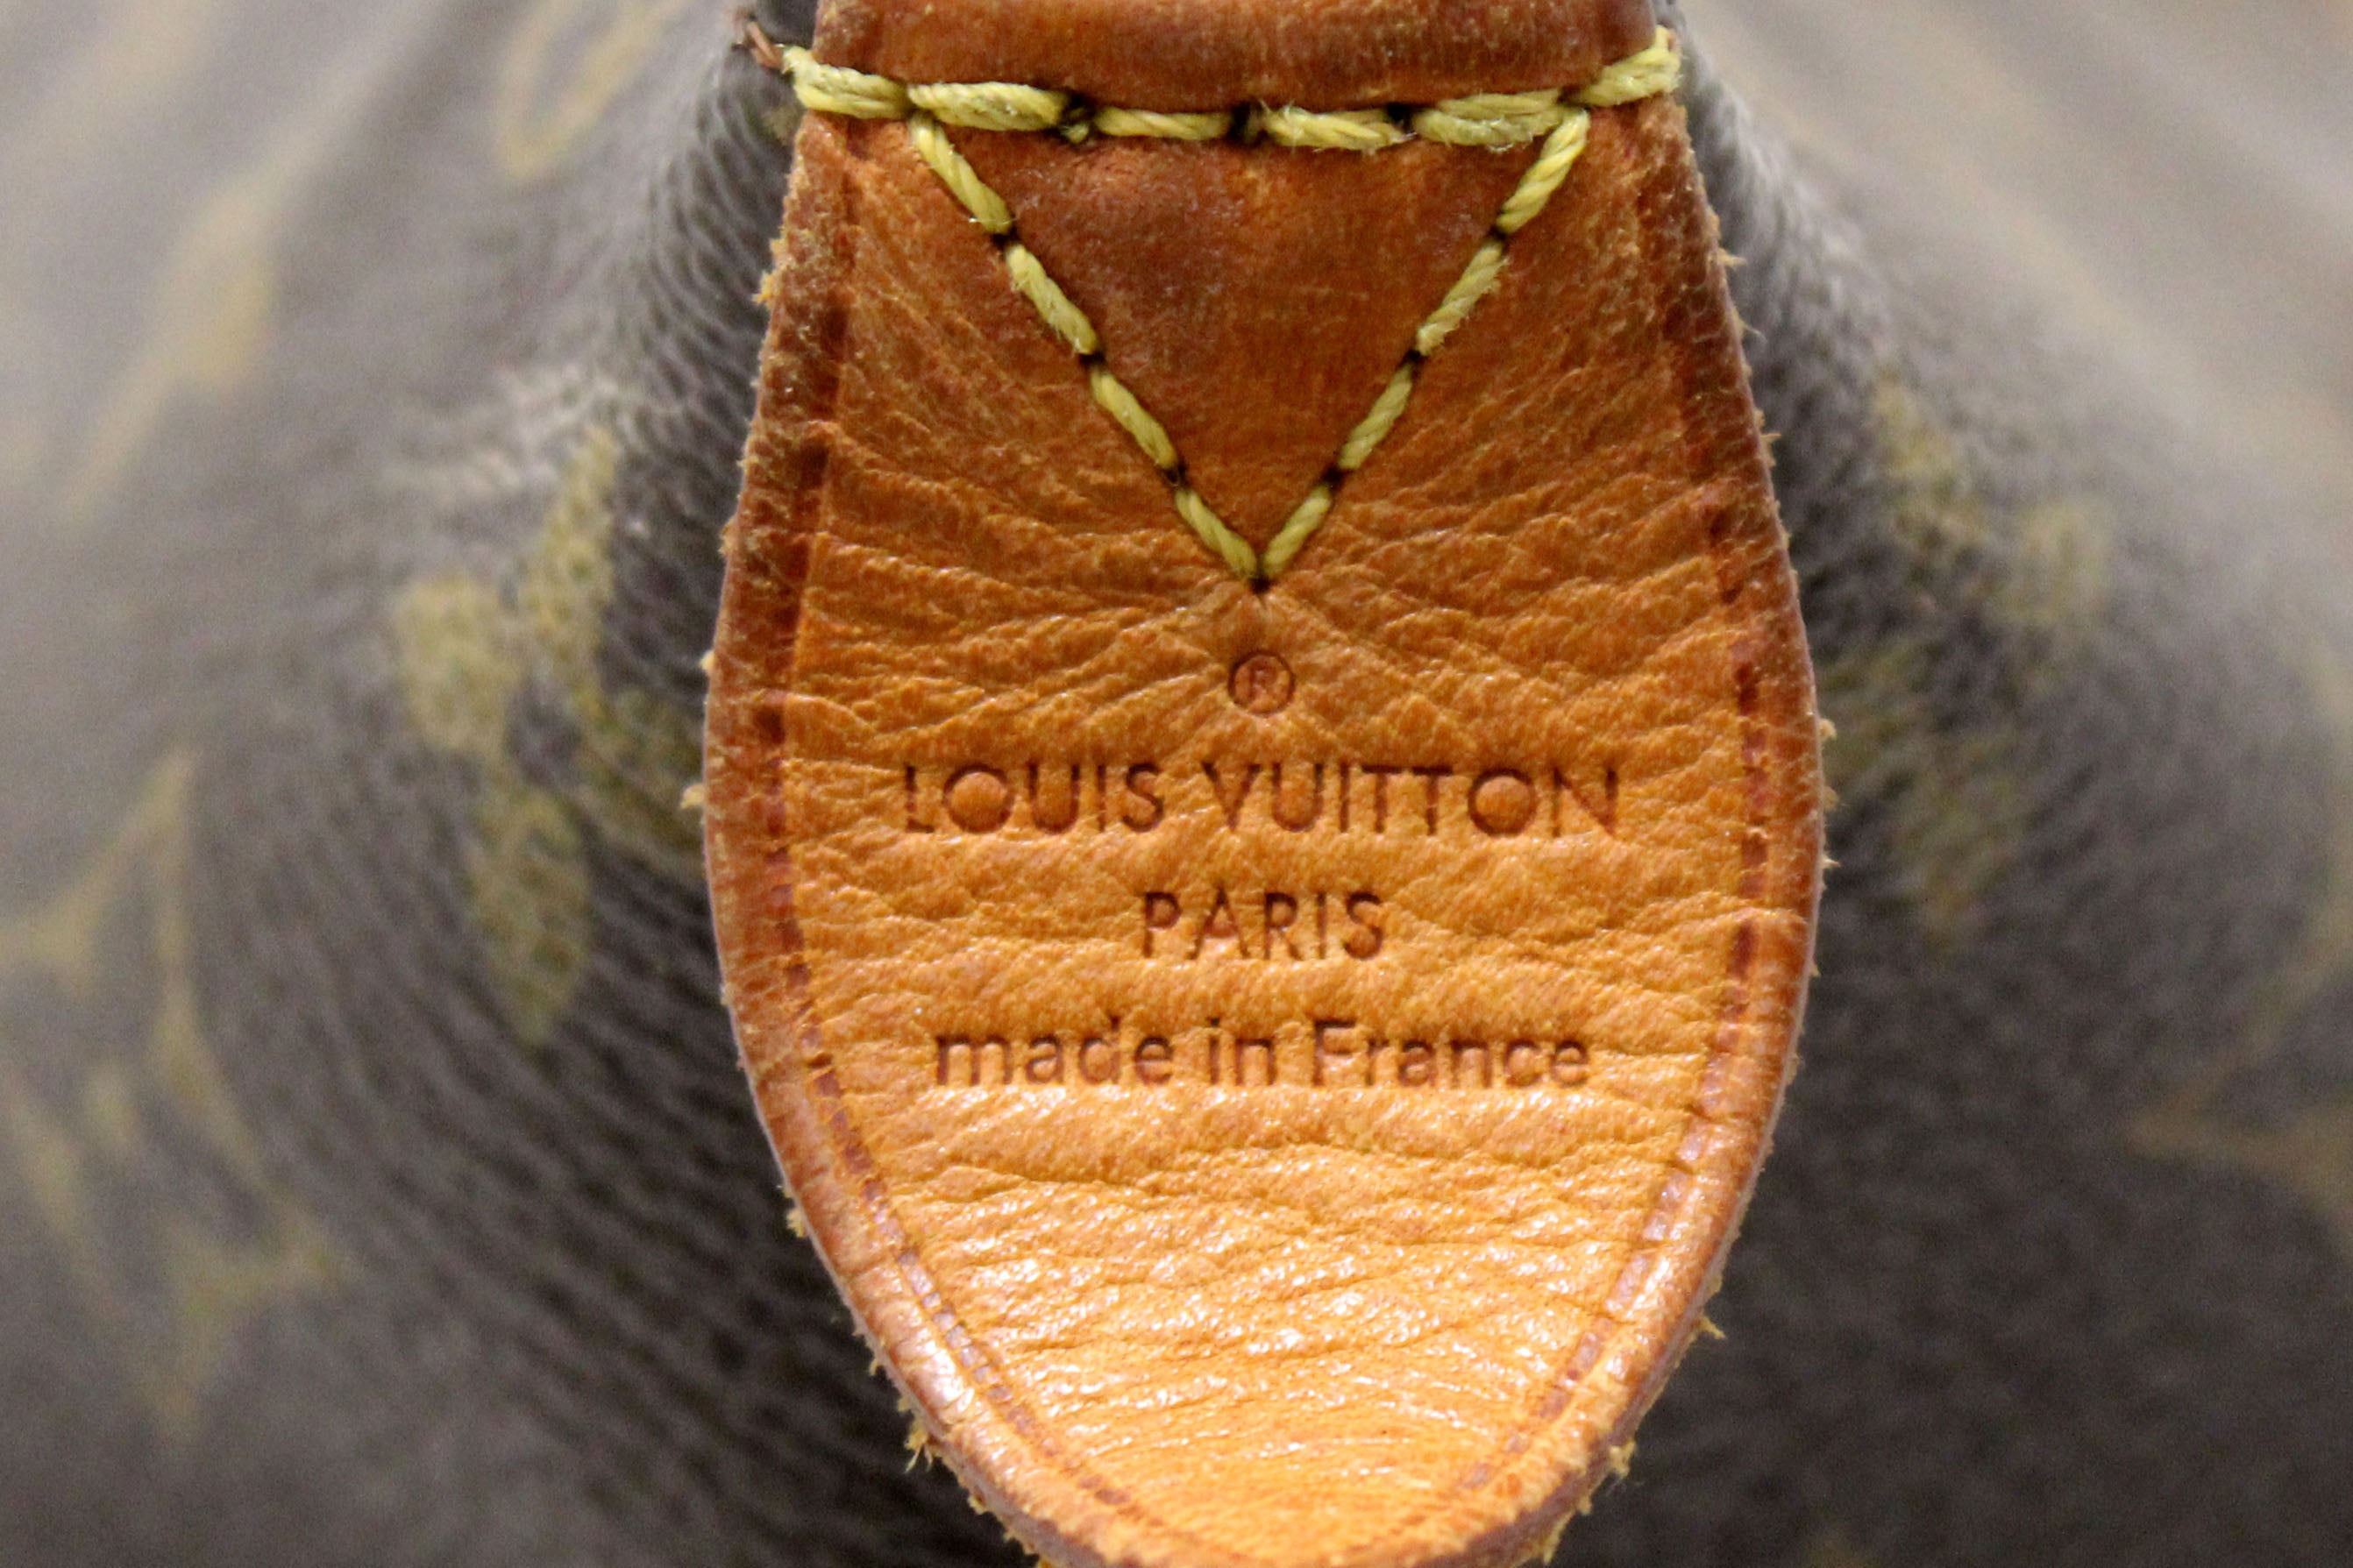 Authentic Louis Vuitton Monogram Totally MM Shoulder Tote Bag